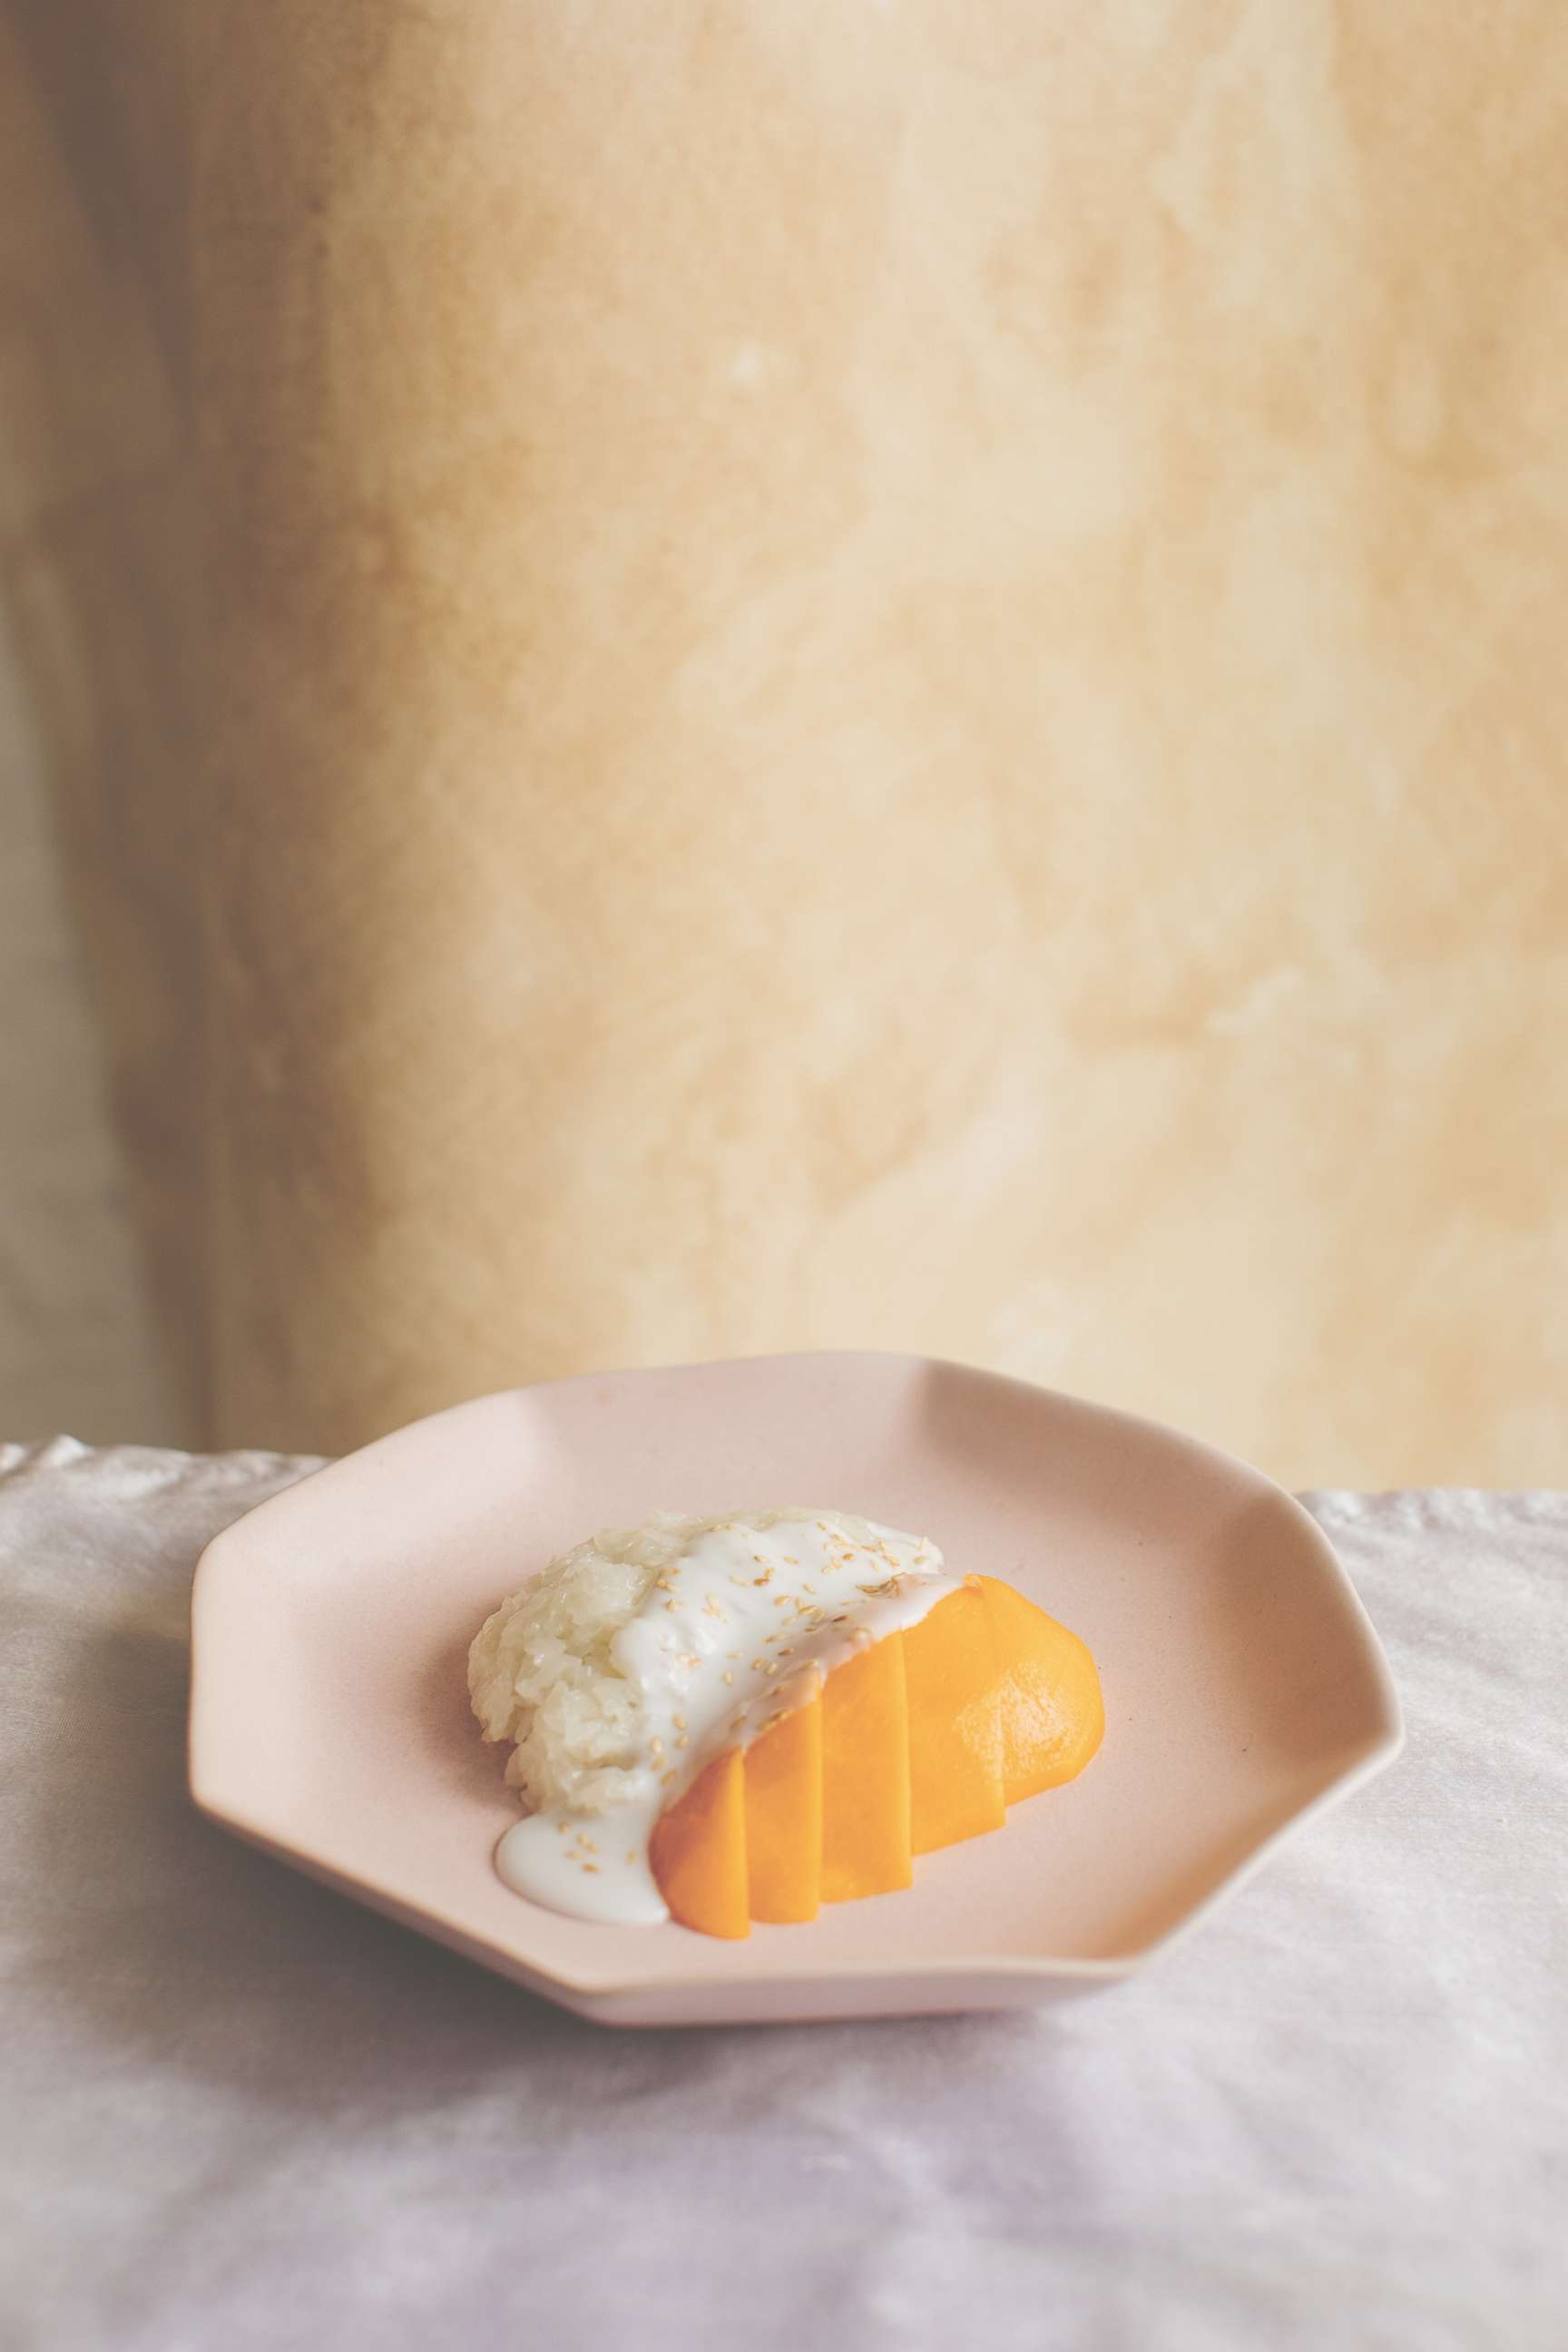 PHOTO: Sticky rice with mango from John Chantarasak's debut cookbook of authentic Thai recipes.